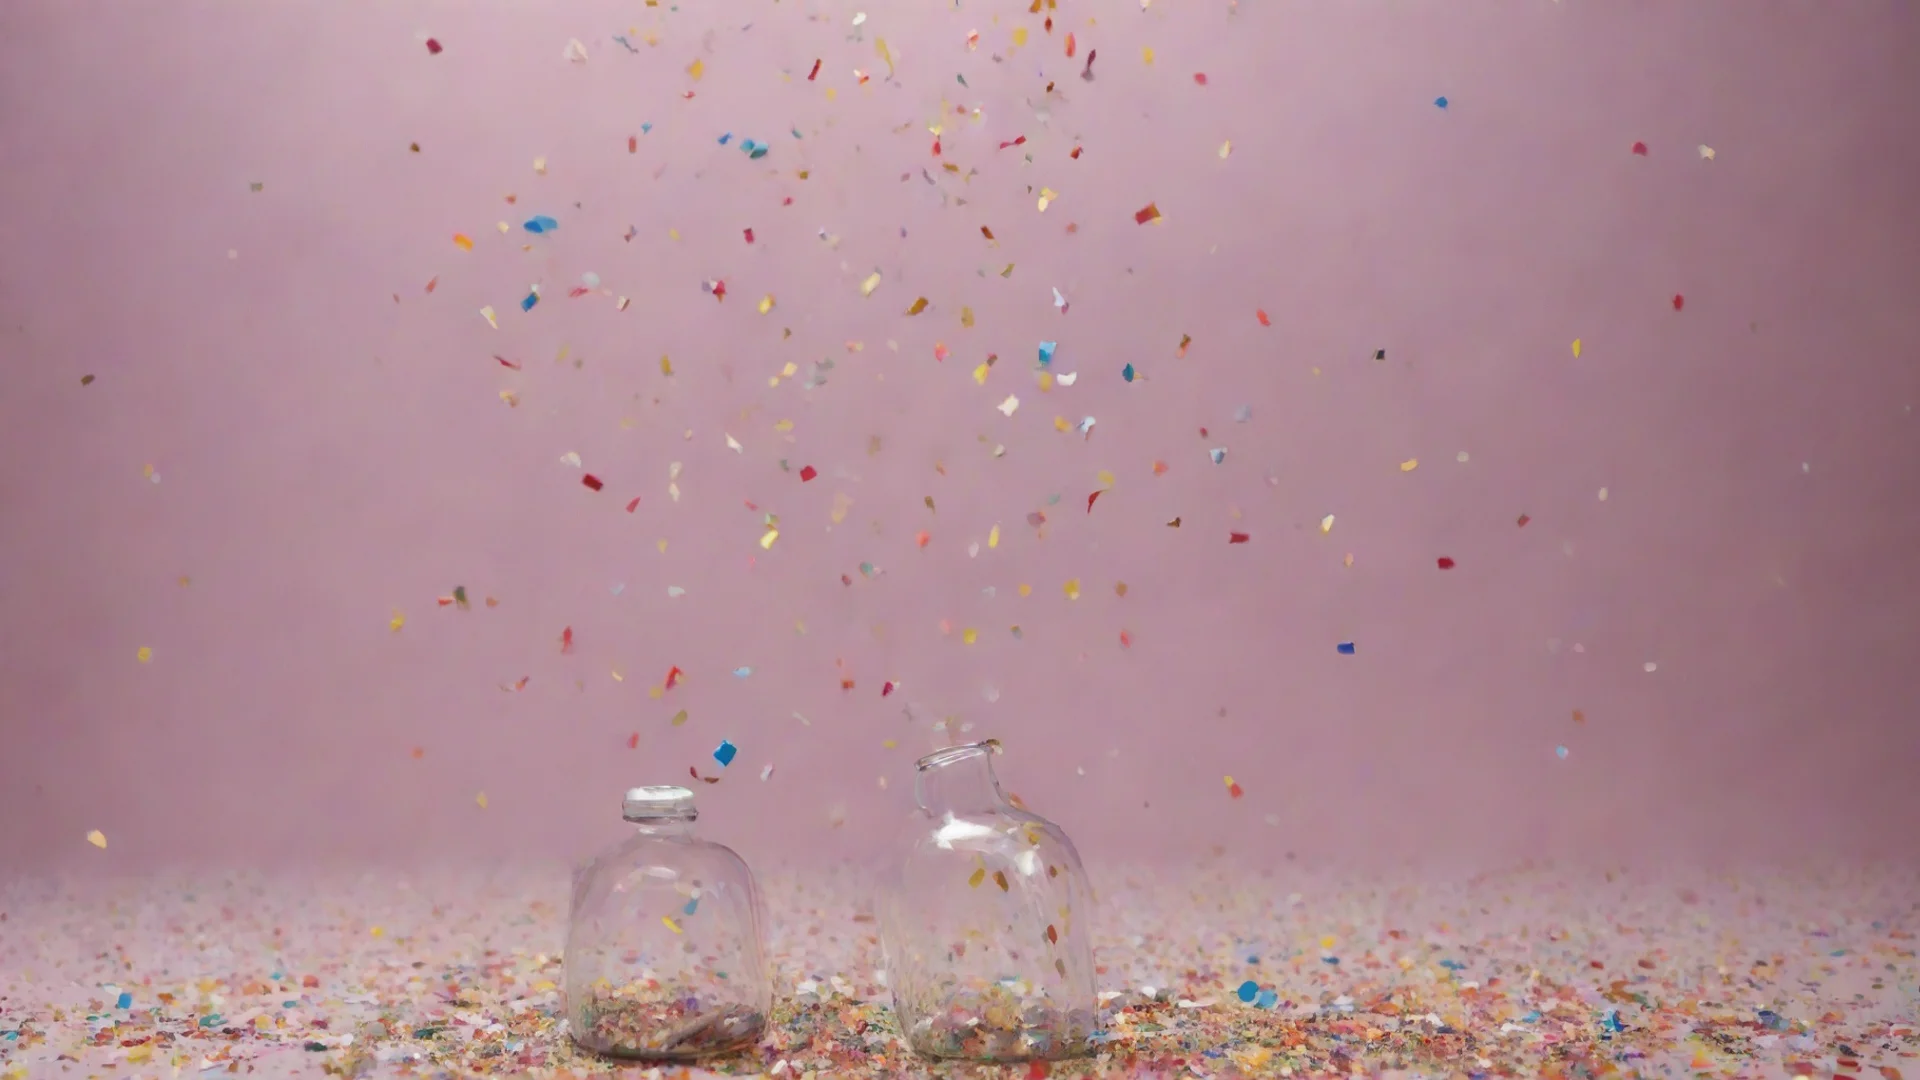 aiepic lovely artistic wind bottle pop confetti amazing celebration wonderful detailed asthetic wide